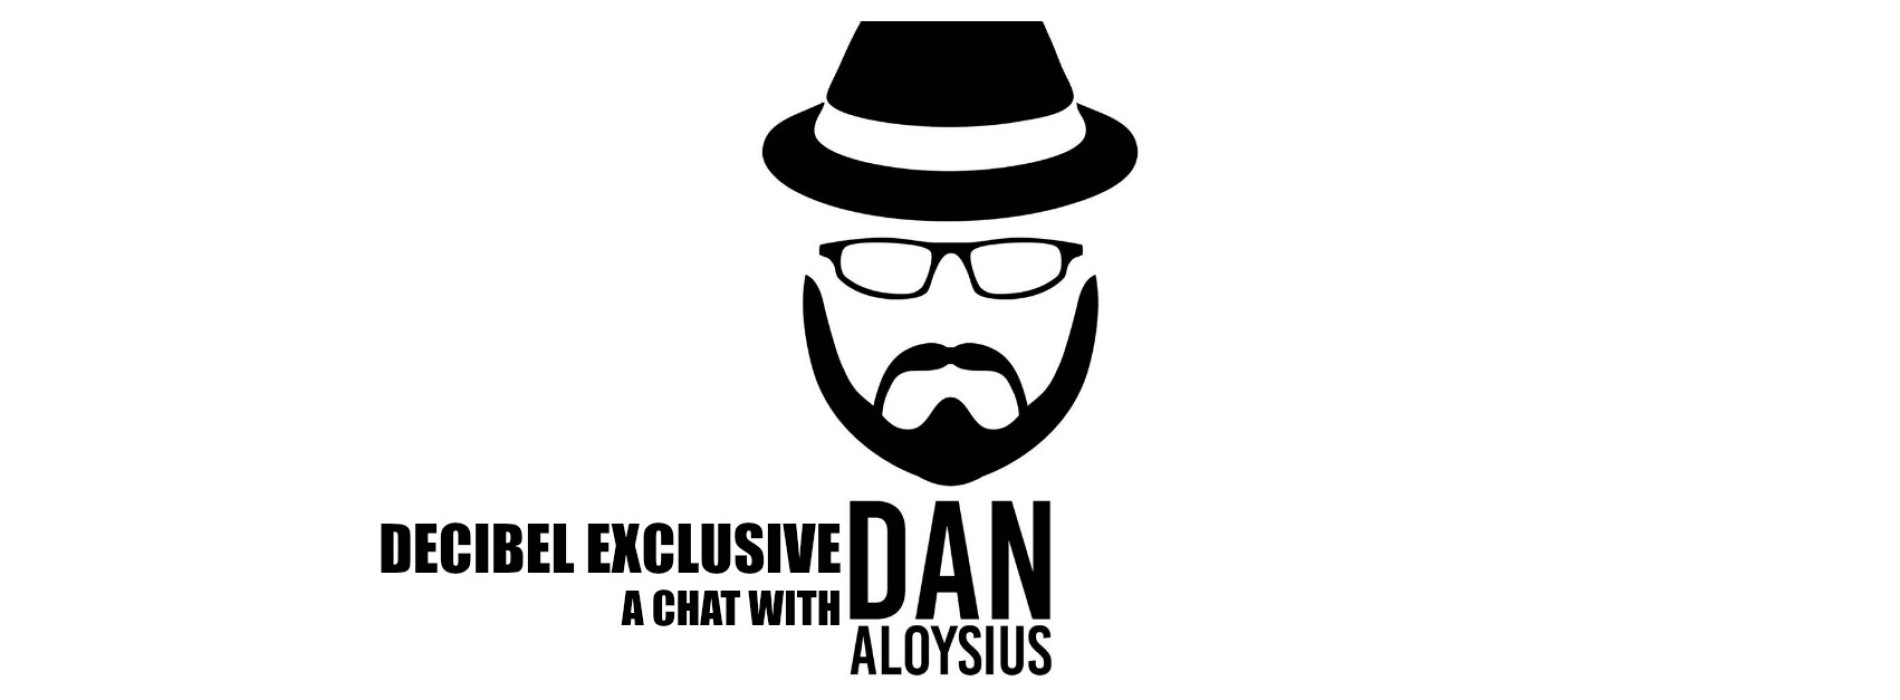 Decibel Exclusive : A Chat With Dan Aloysius